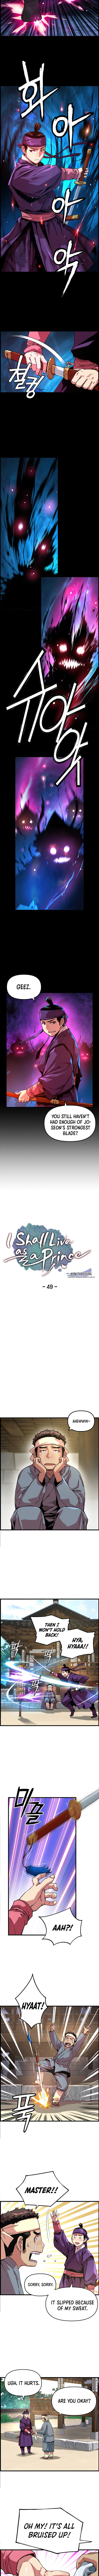 I Shall Live as a Prince - Chapter 49 Page 3